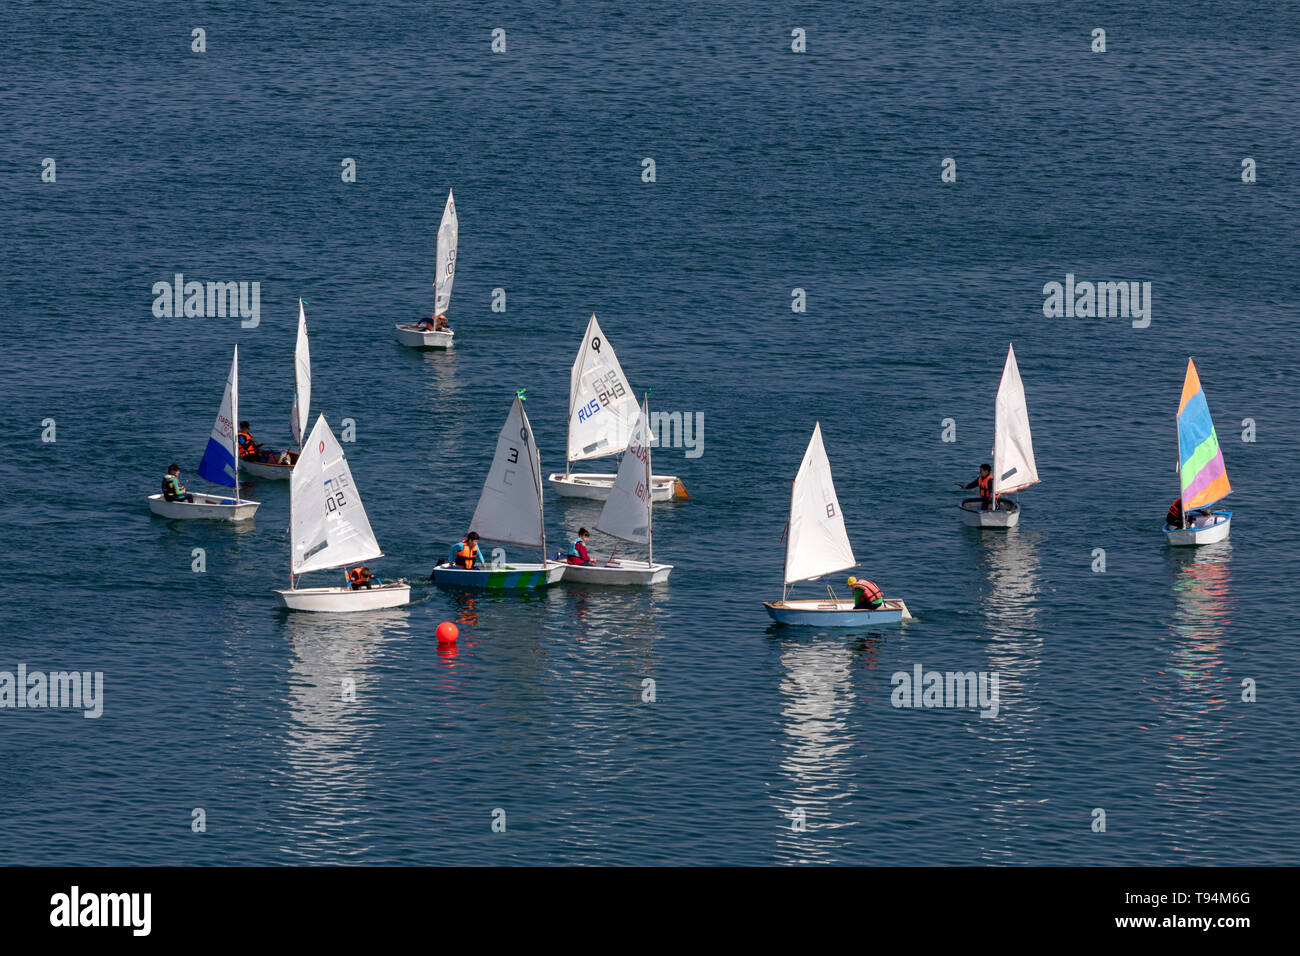 Children learn sailing on the Black sea Stock Photo